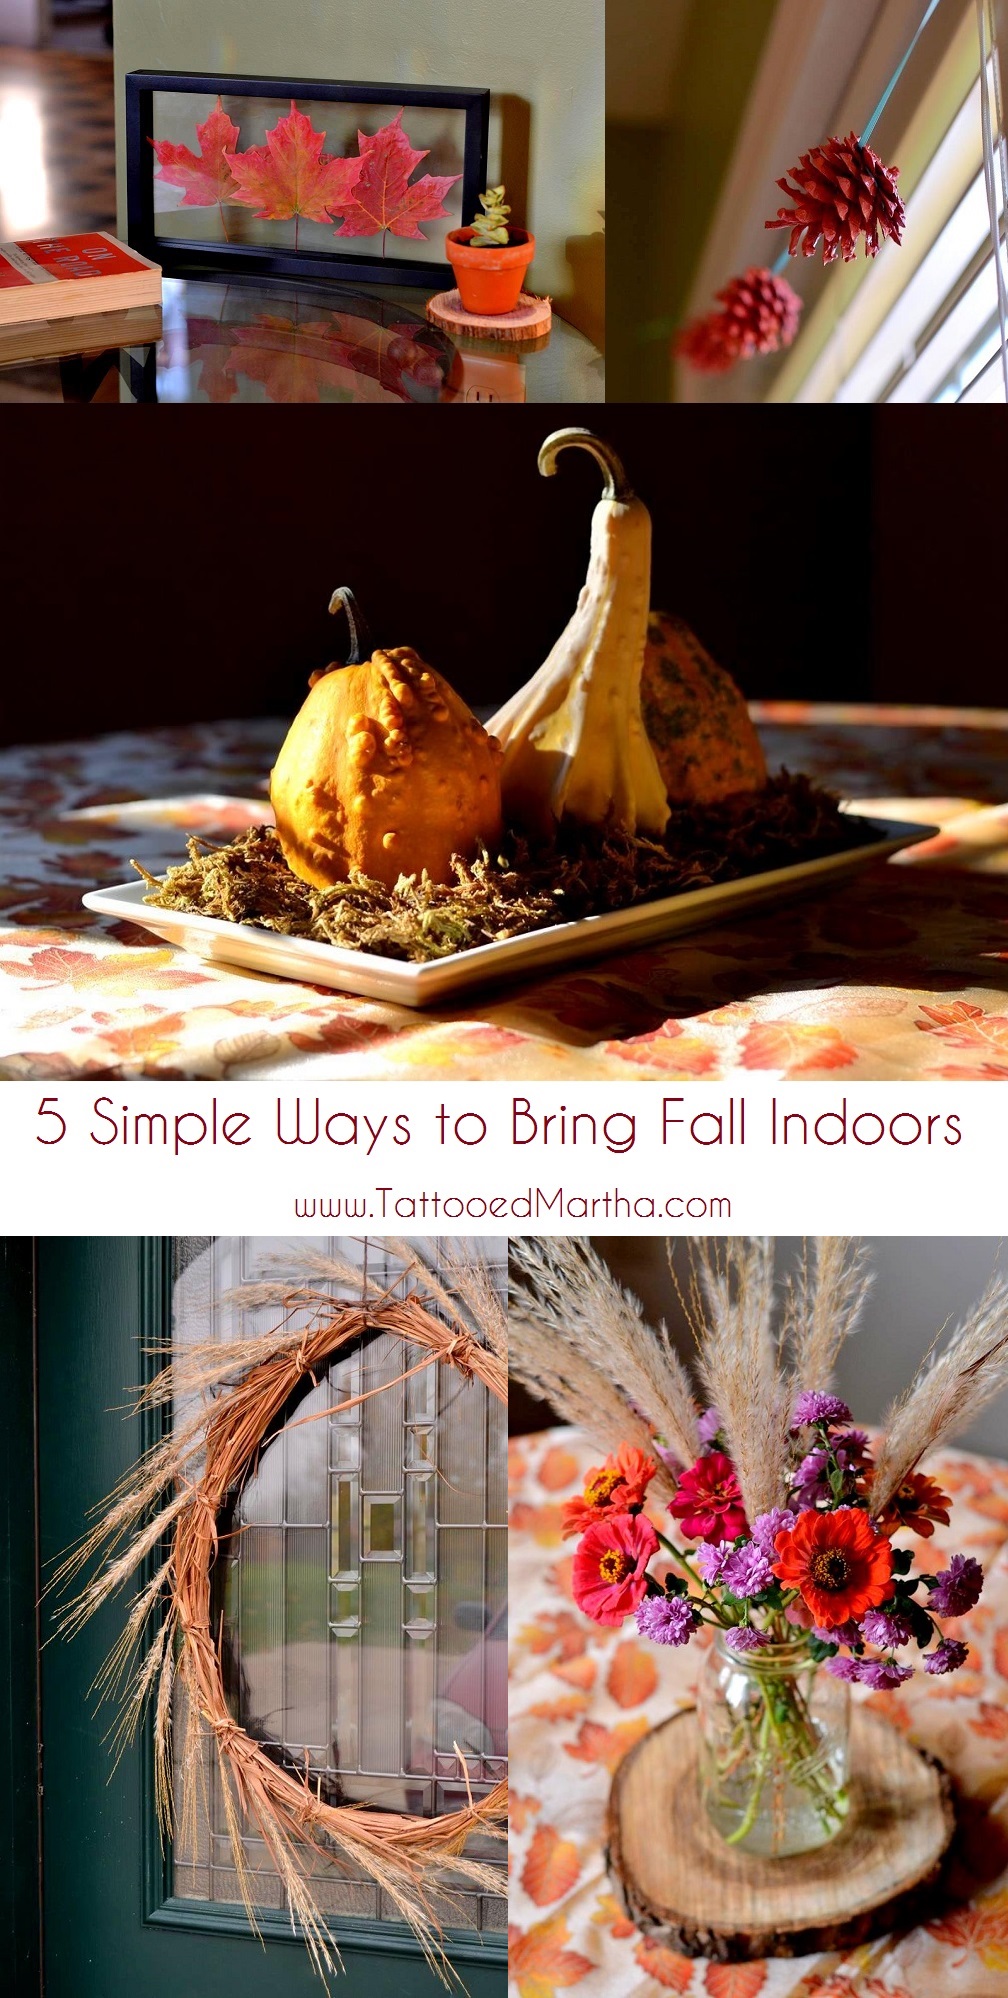 5 Simple Ways to Bring Fall Indoors on www.TattooedMartha.com